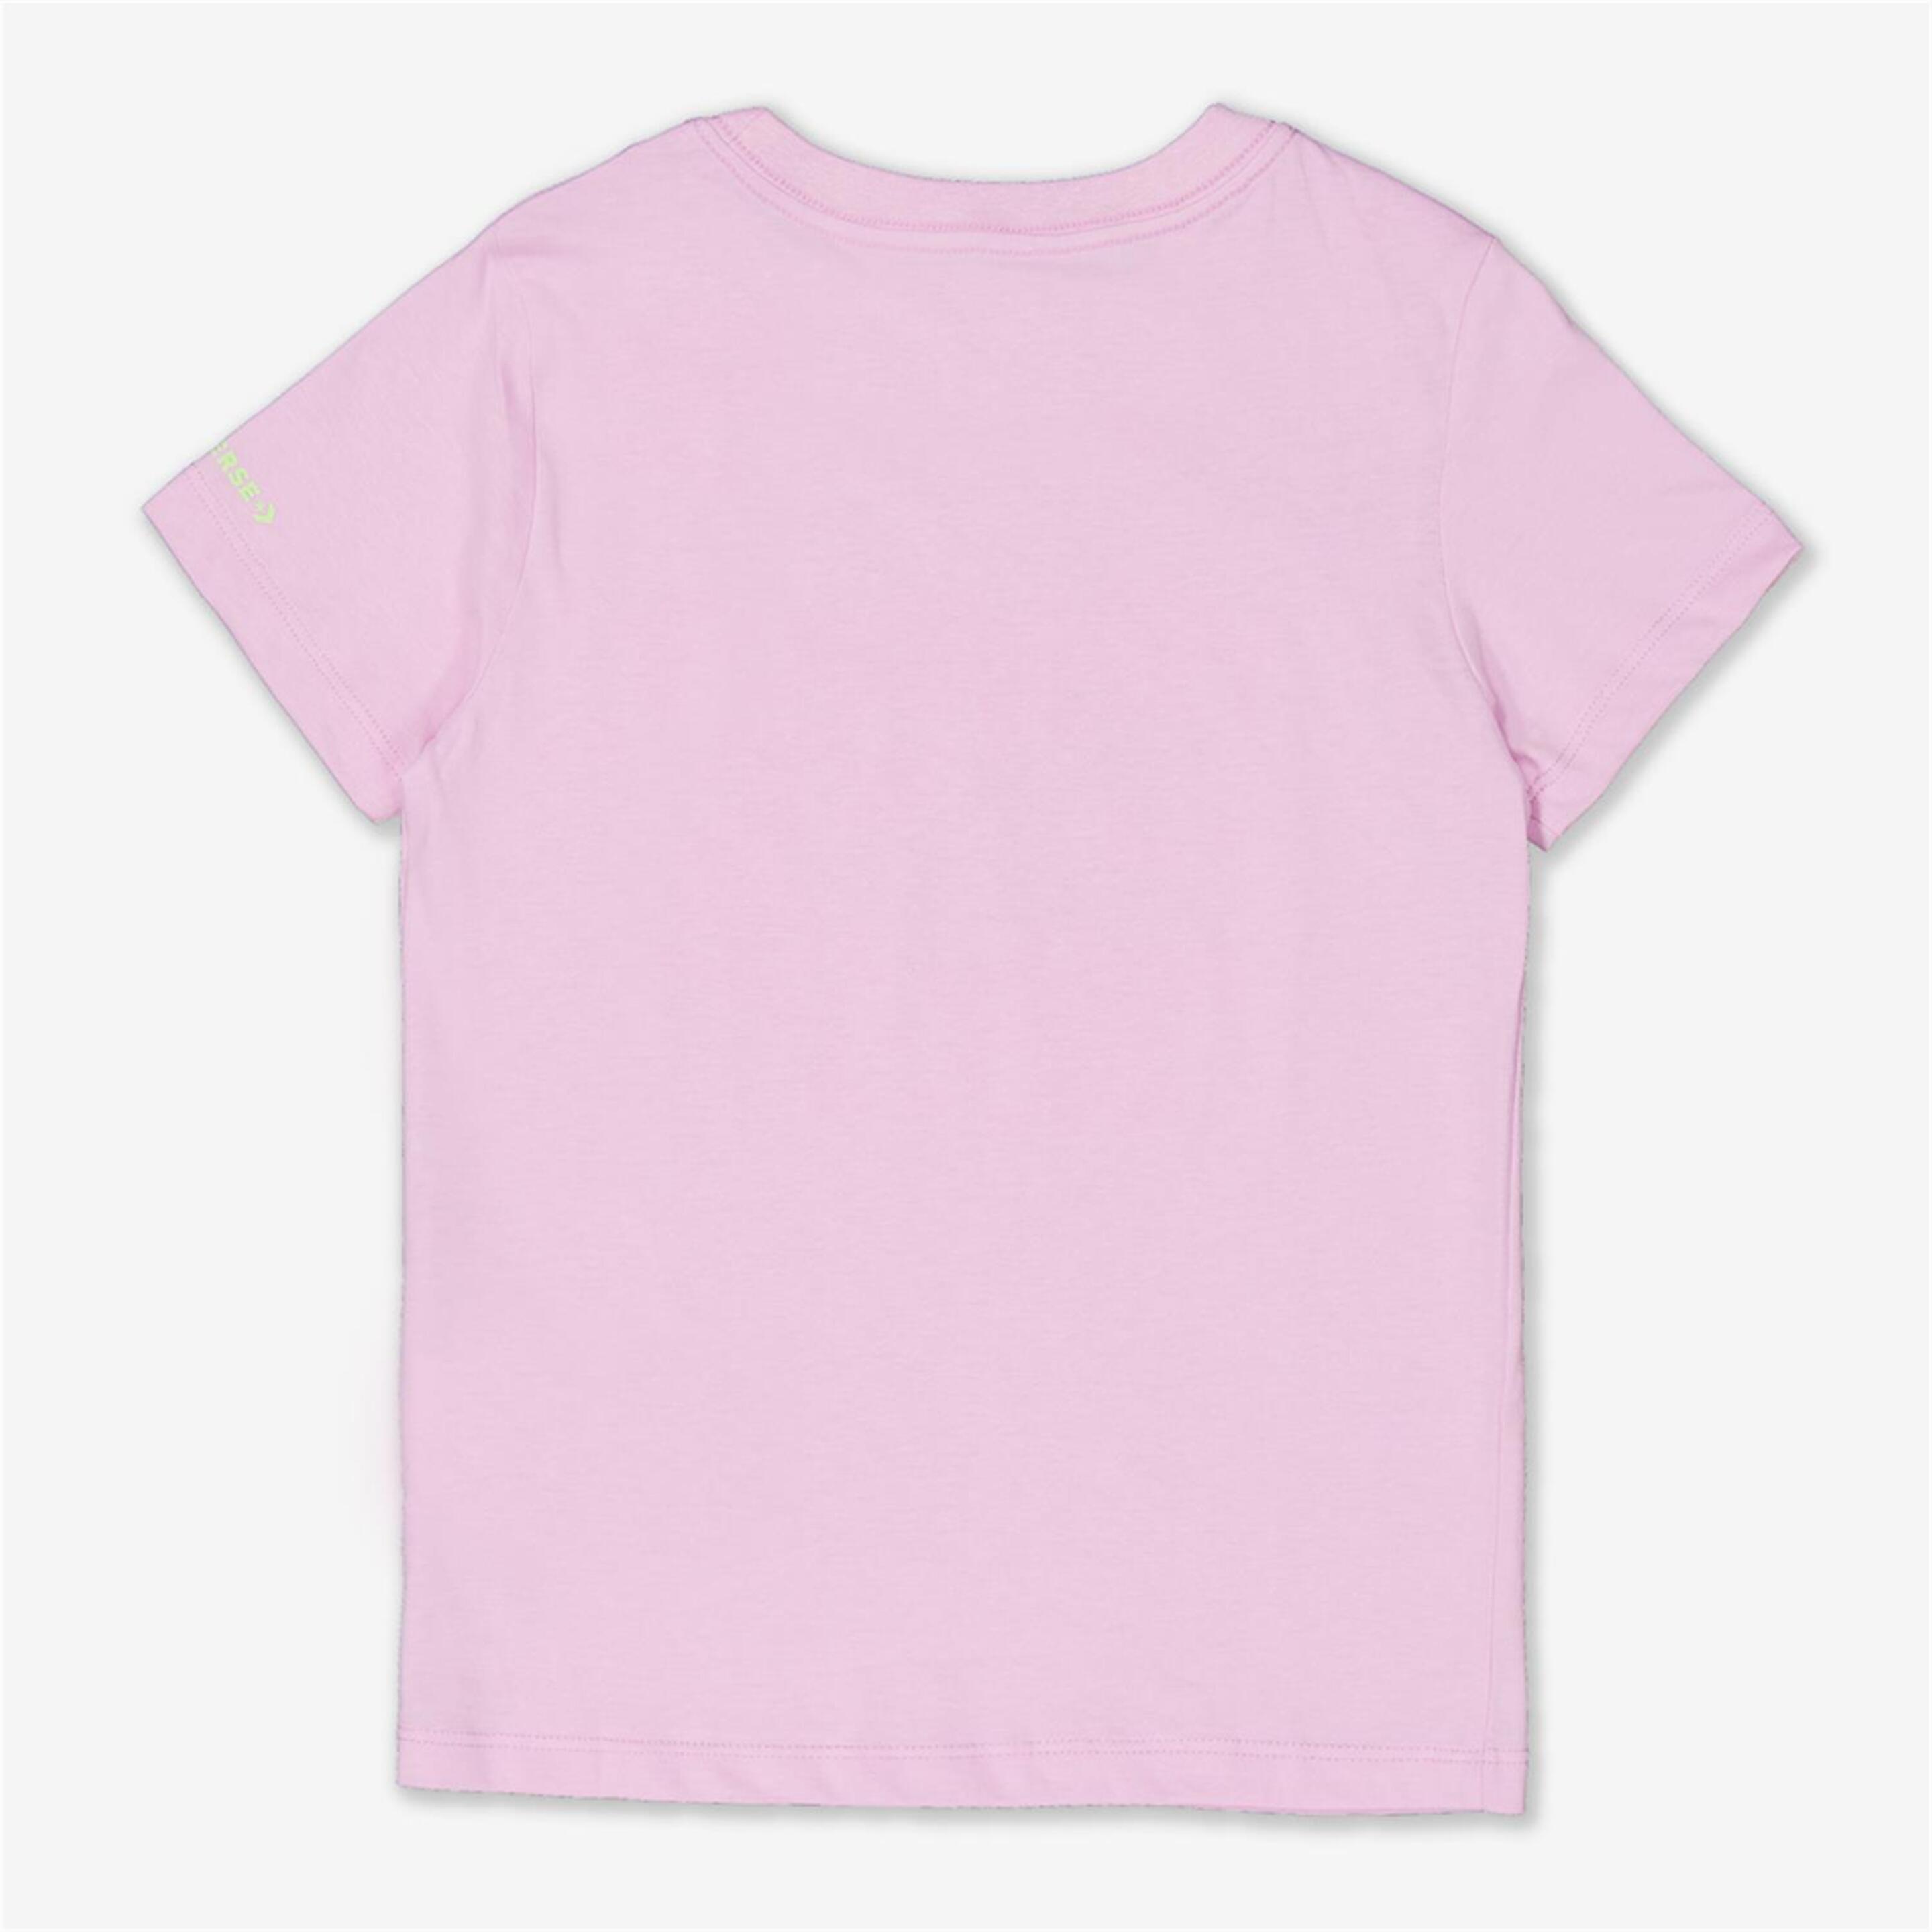 Camiseta Converse - Malva - Camiseta Niña